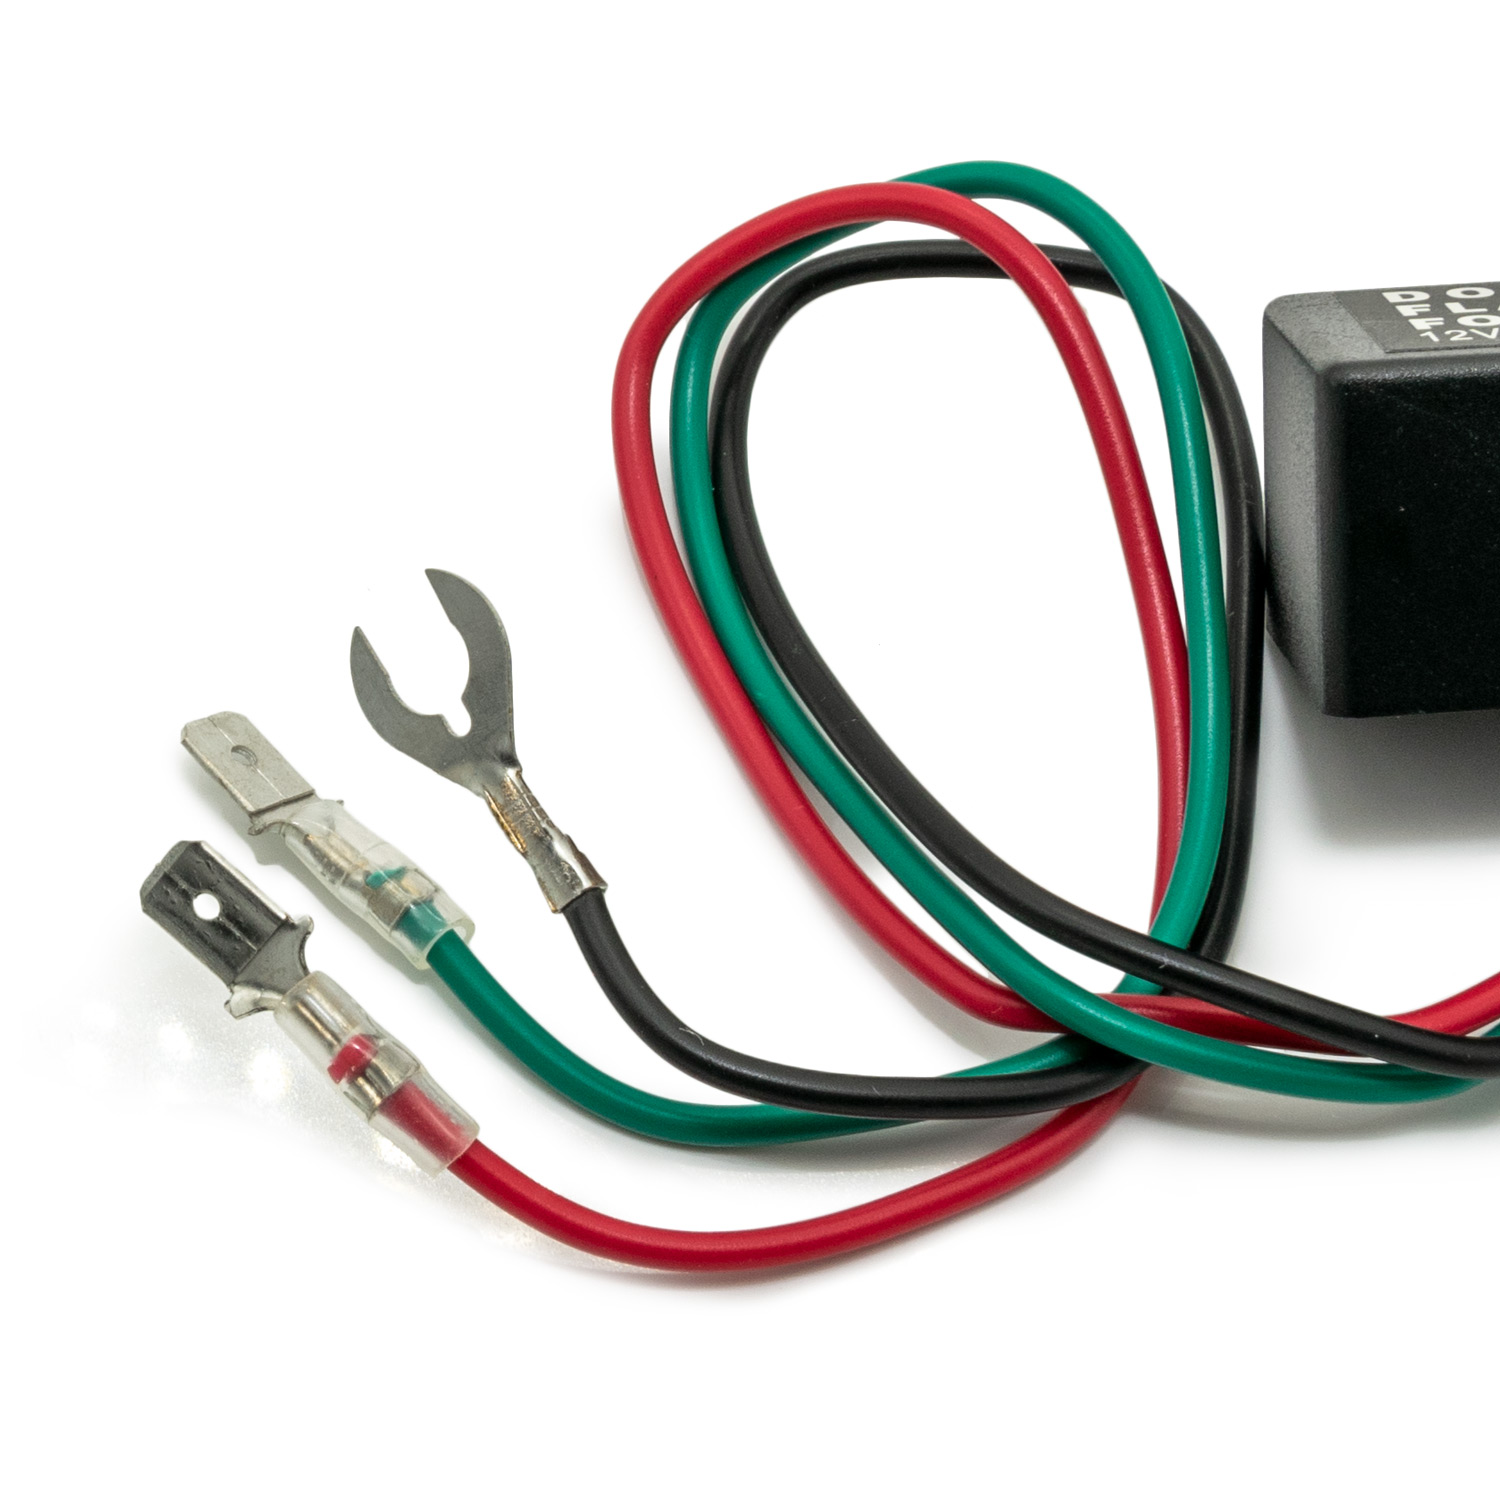 Blinkgeber Flashtec Blinkerrelais 12V 3 PIN, universal für LED Blinker   Heavy Tuned: Günstige Preise für Rollerteile, Motorrad Ersatzteile, Mofa,  Vespa & mehr